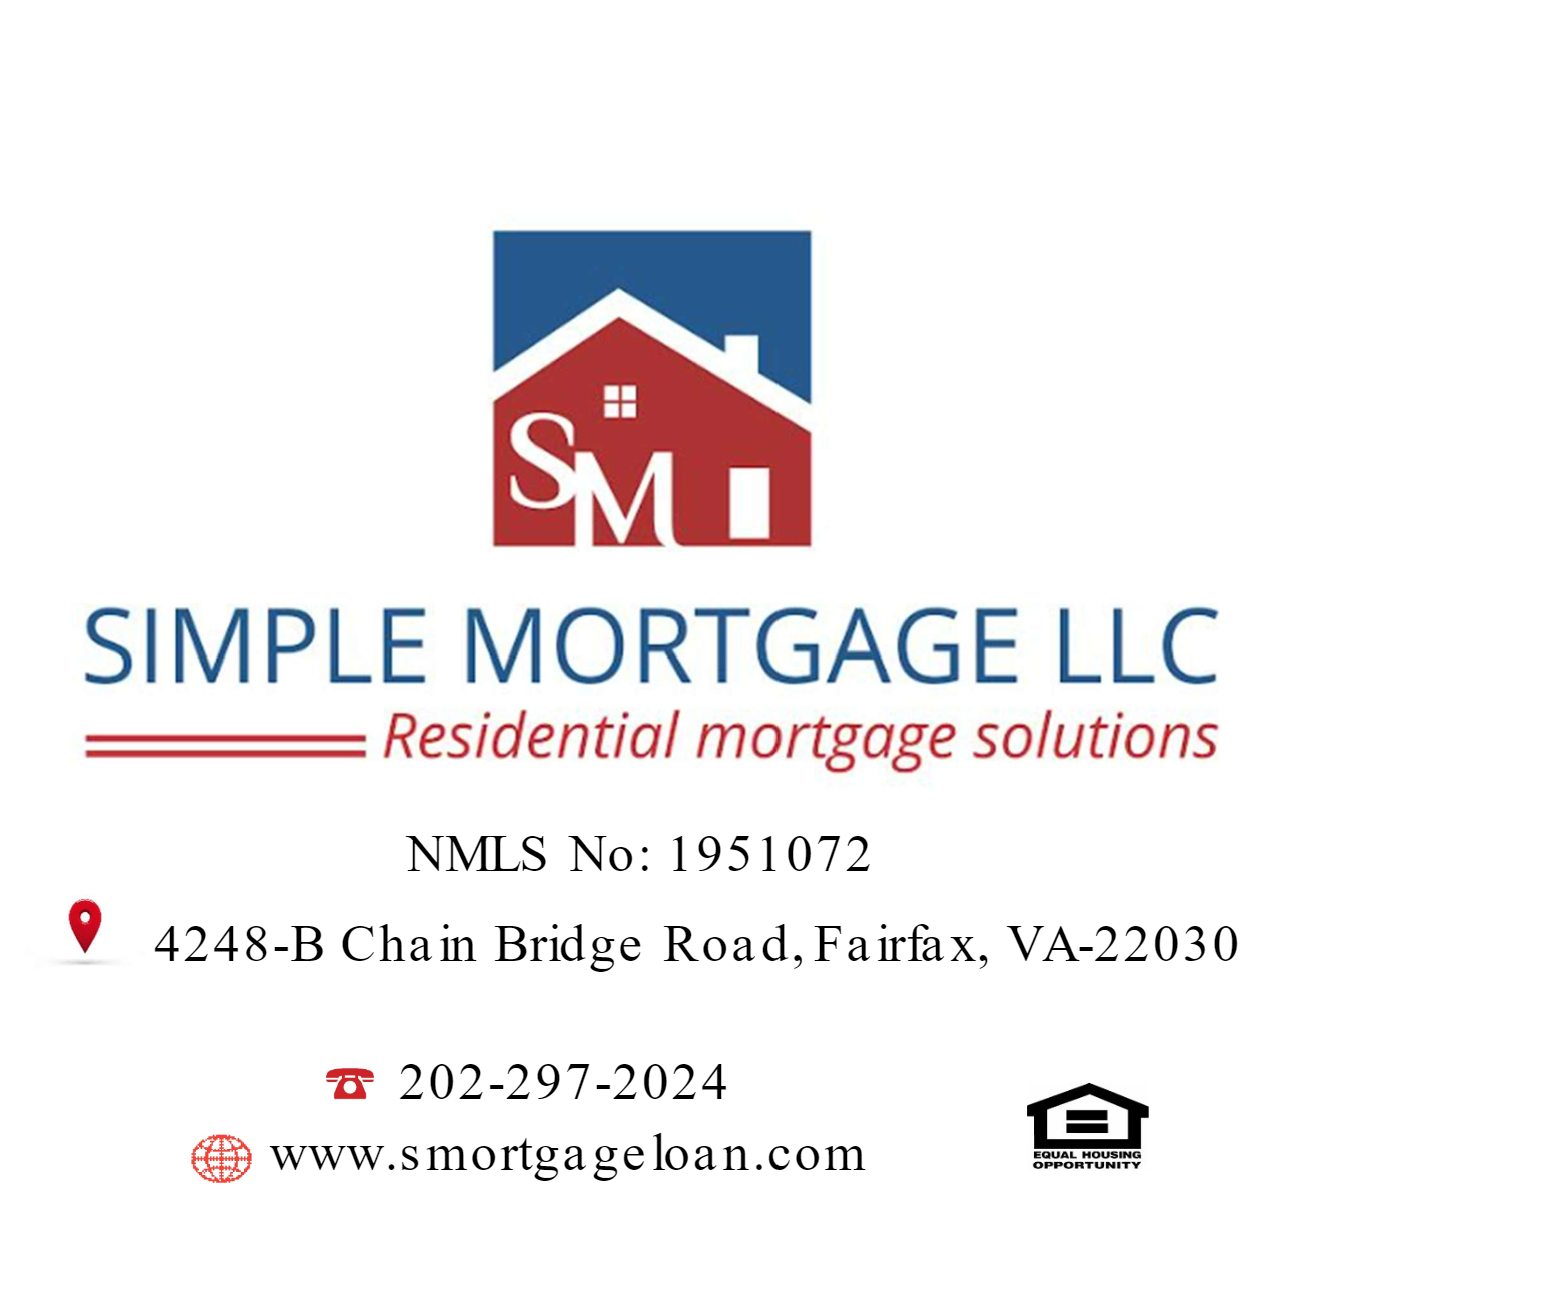 Simple Mortgage LLC